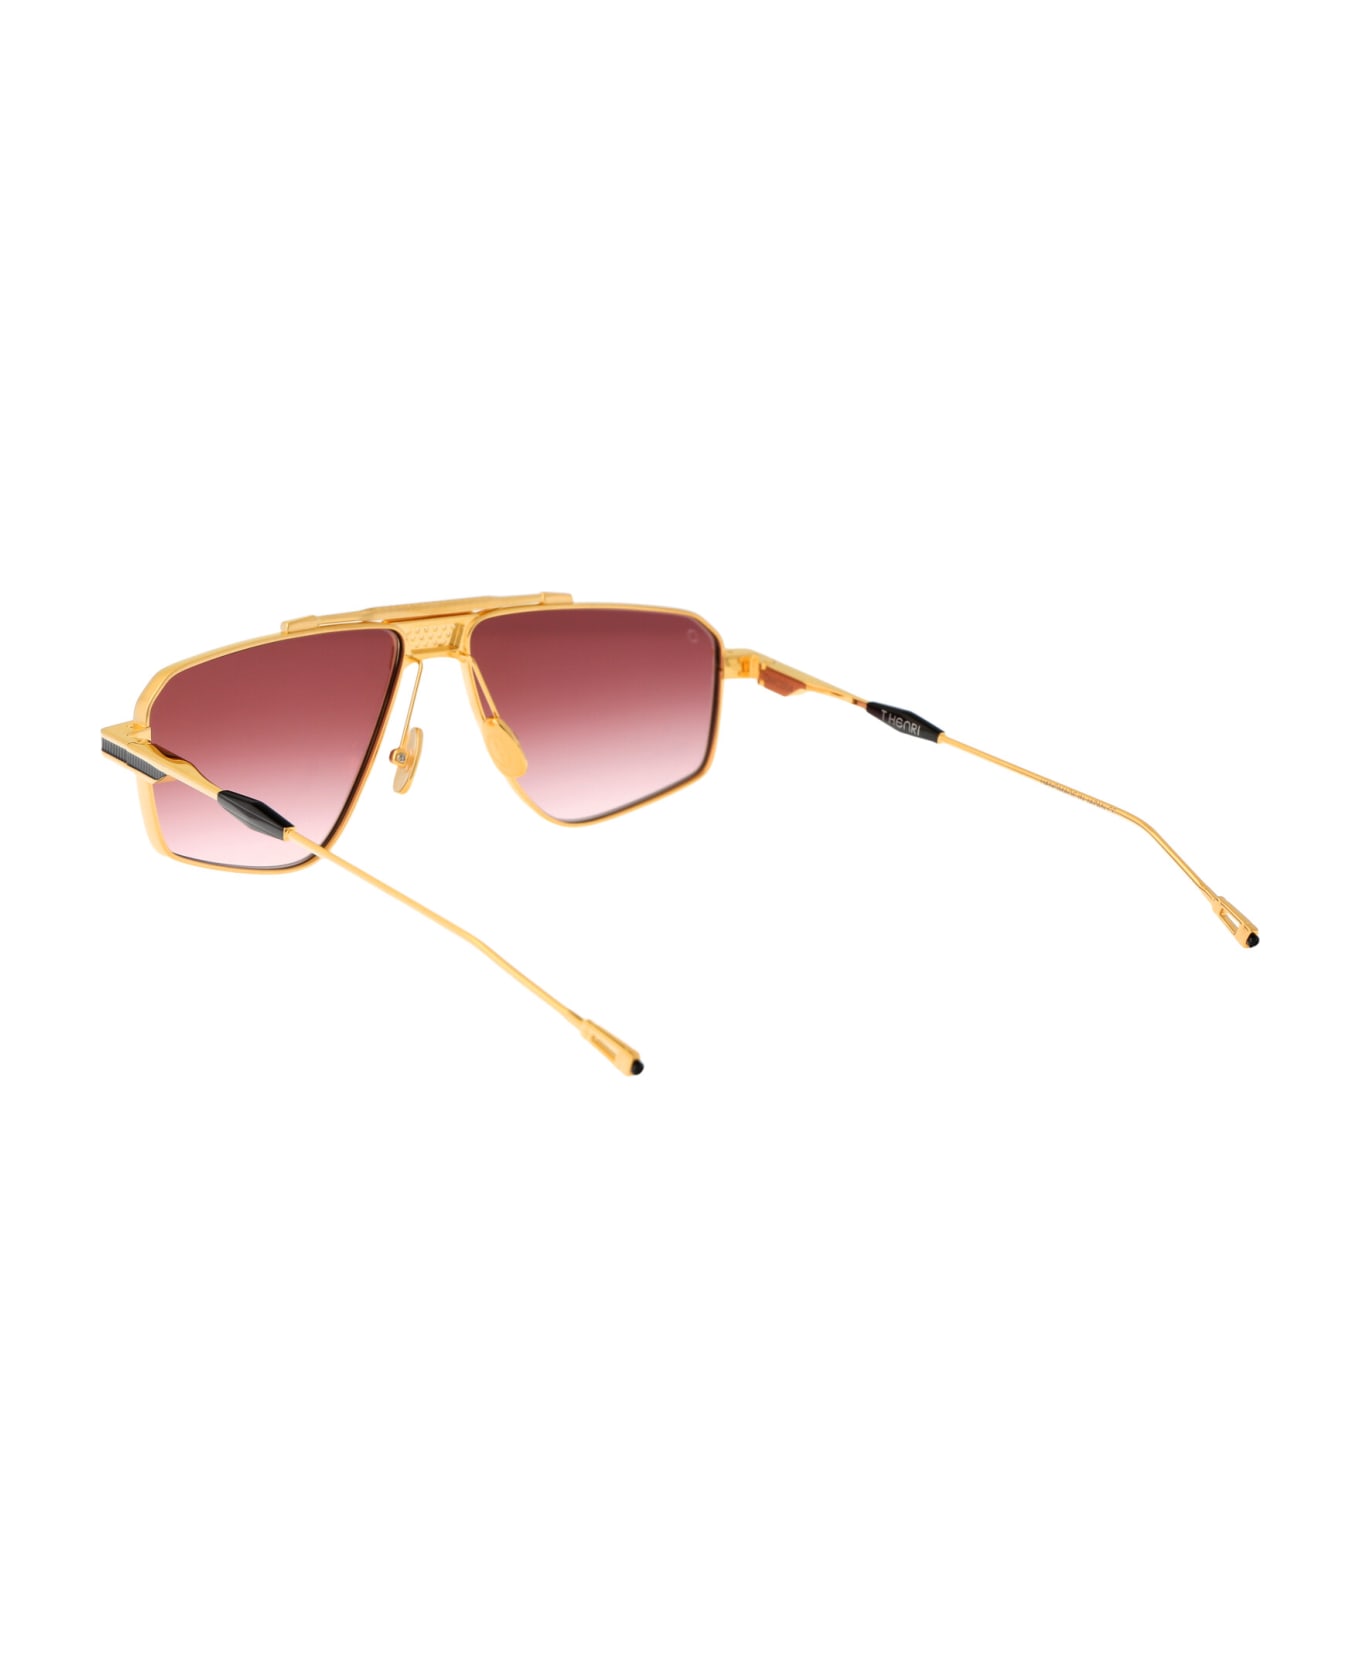 T Henri Drophead Sunglasses - CASINO ROYALE